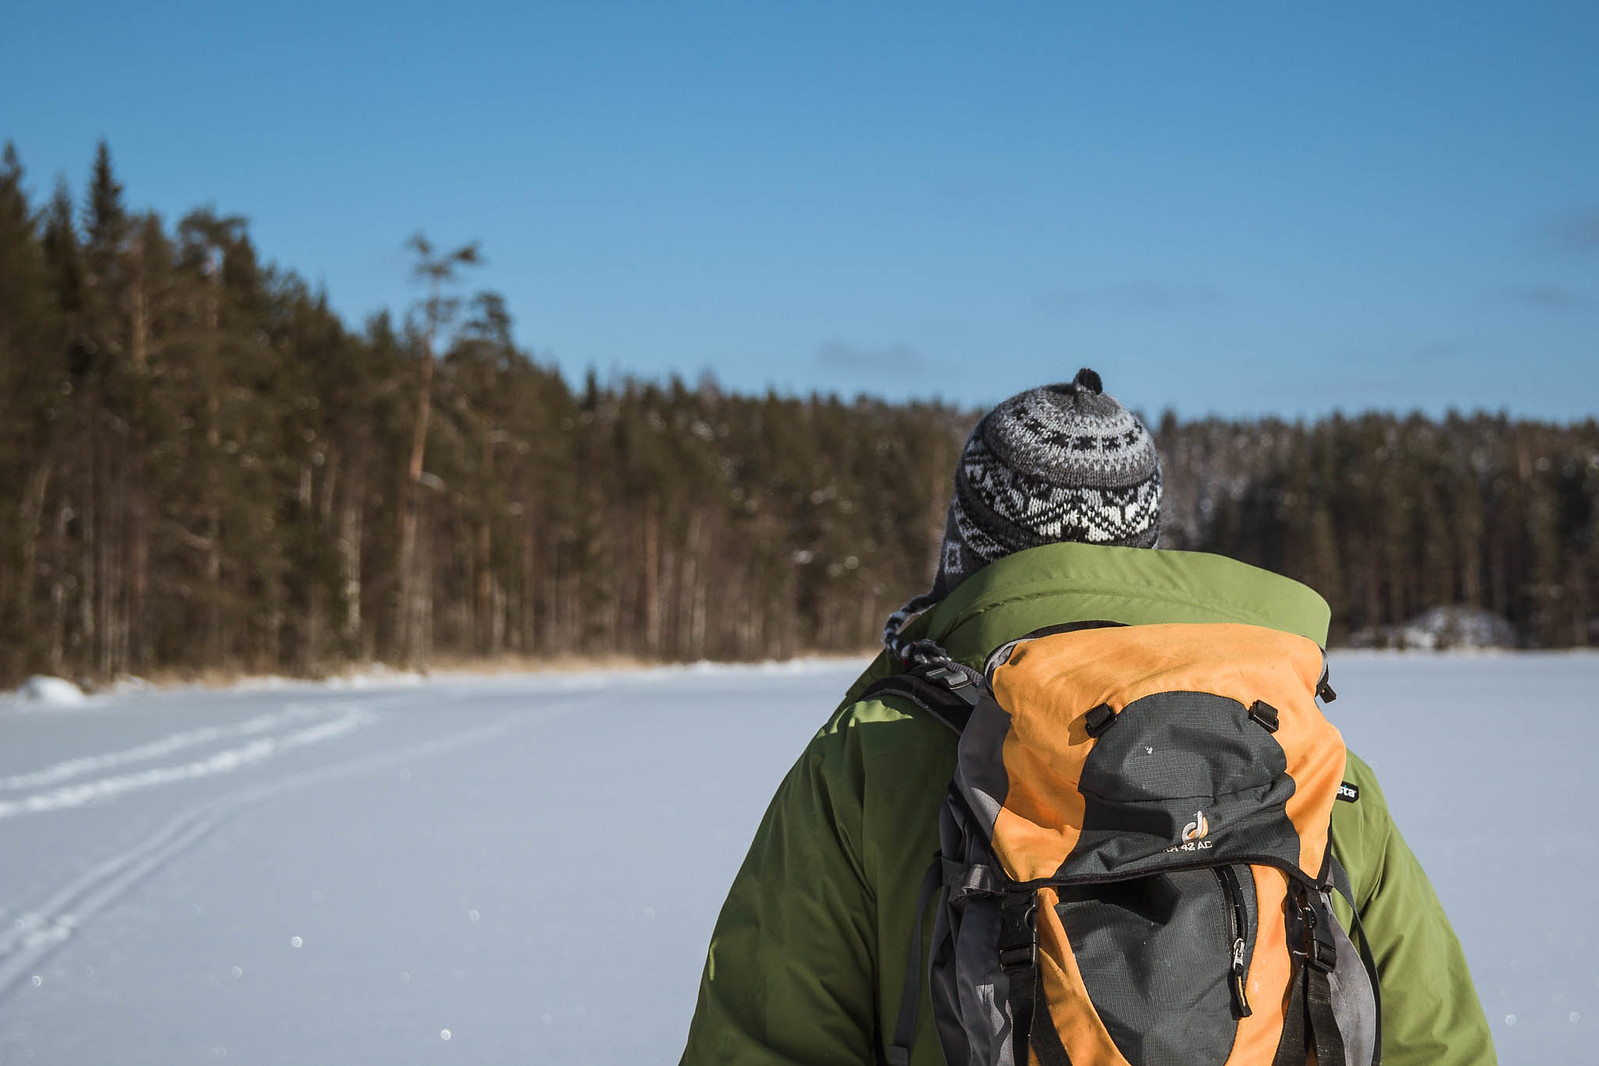 Evo hiking area / Digitrail Finland